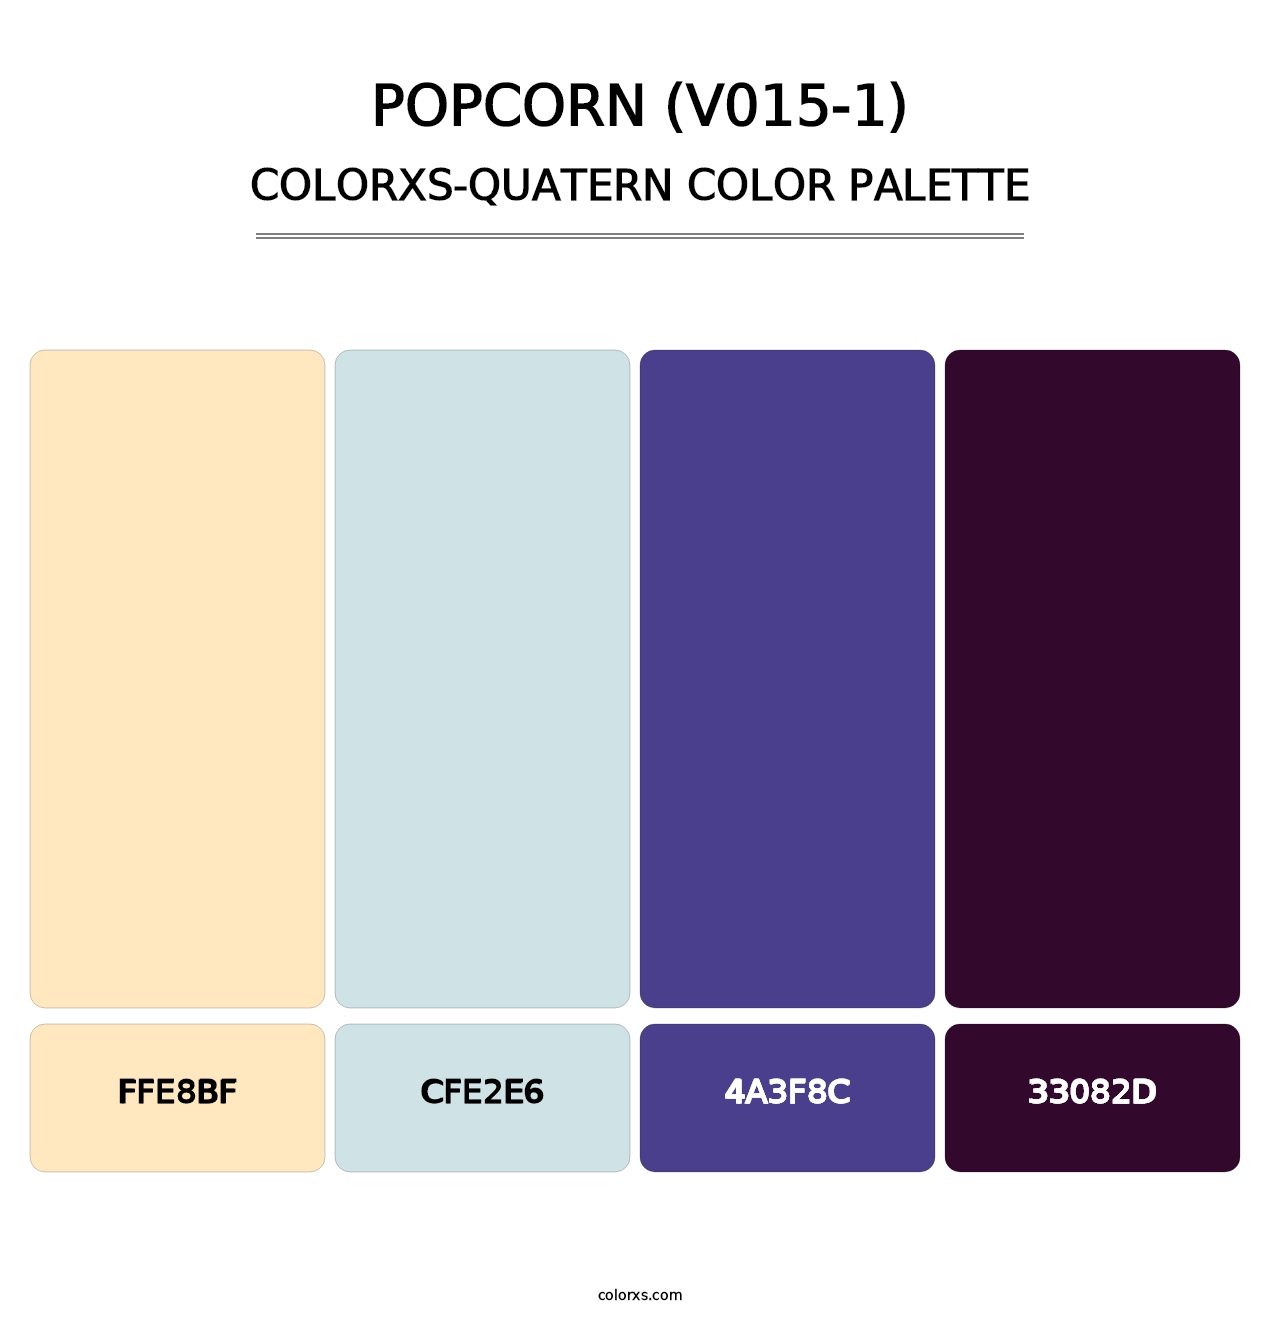 Popcorn (V015-1) - Colorxs Quatern Palette